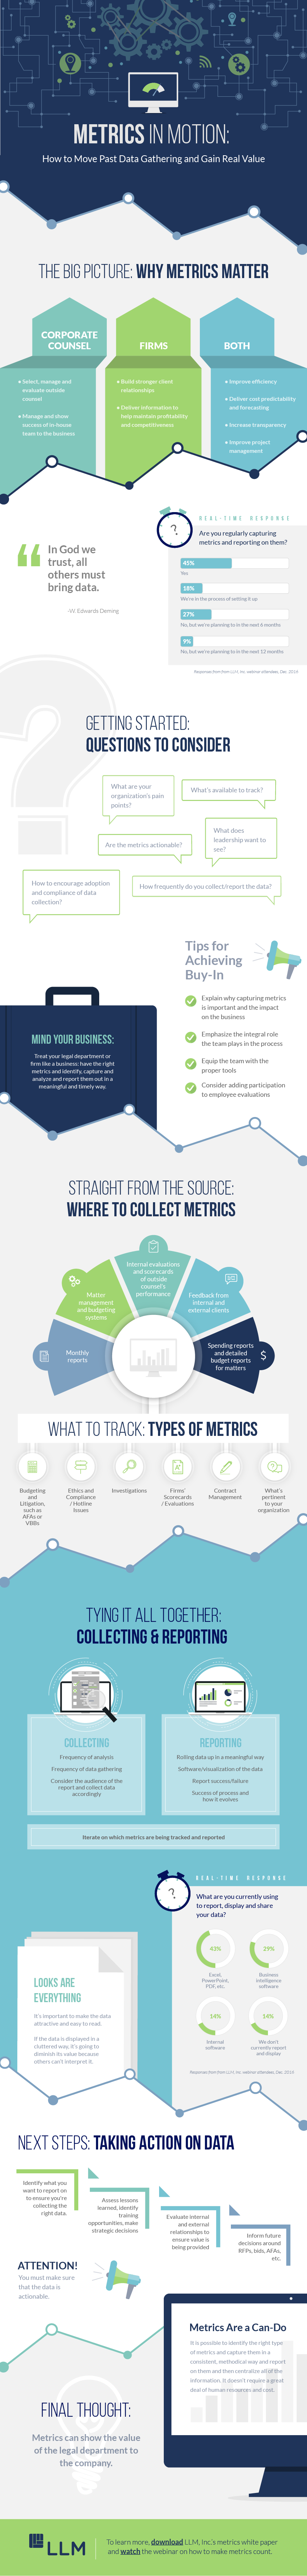 infographic-MetricsWebinar-FINAL